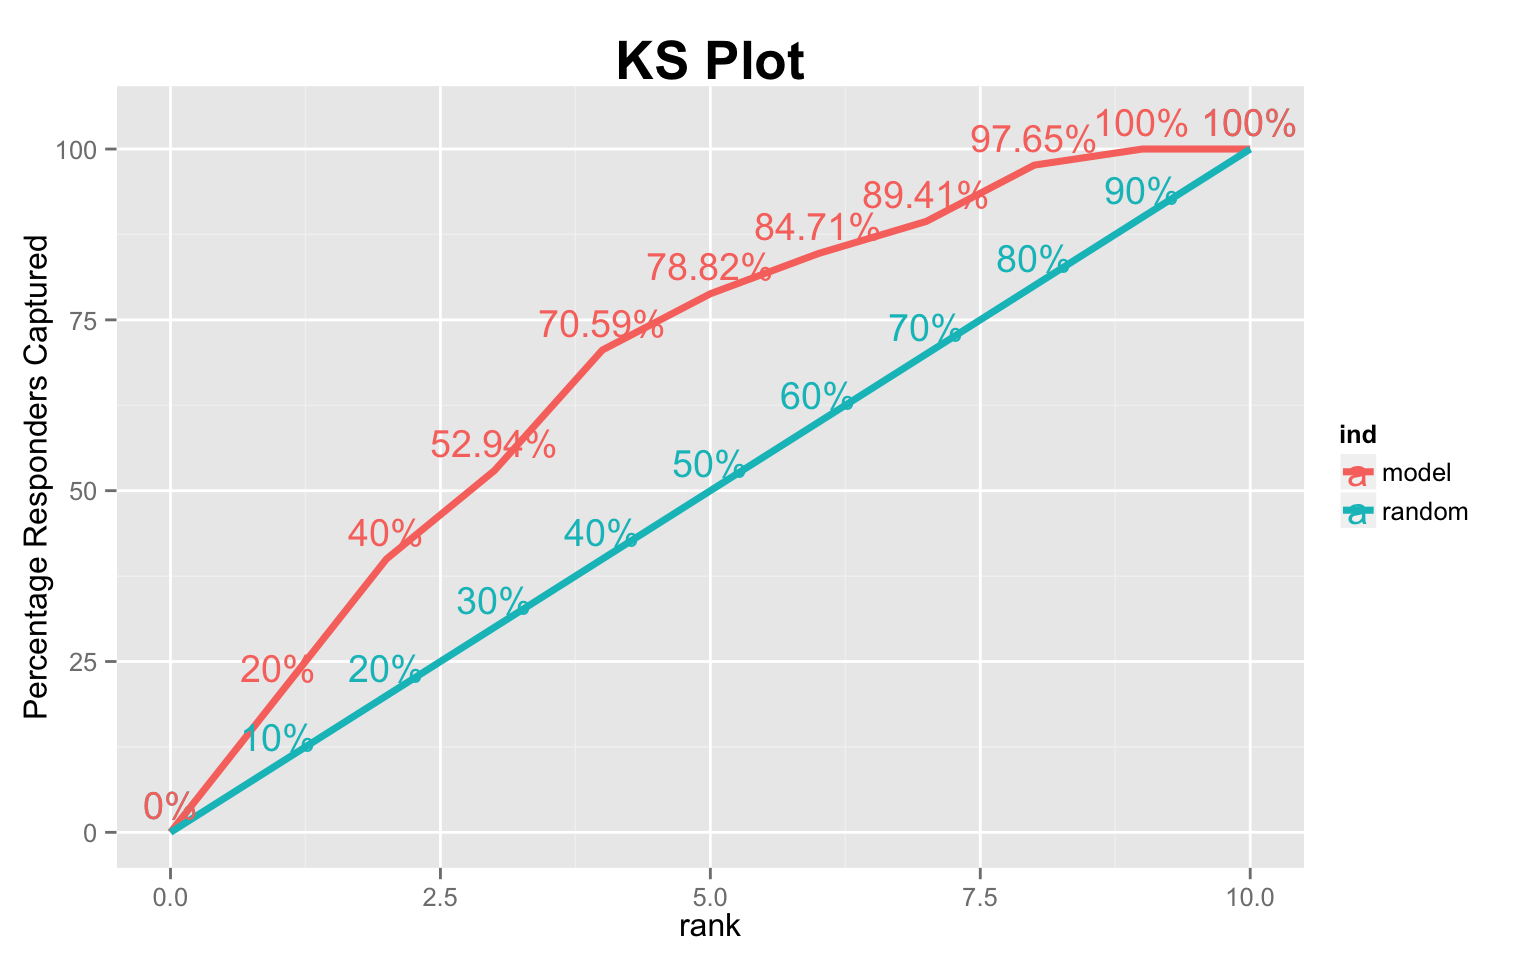 Ks Chart